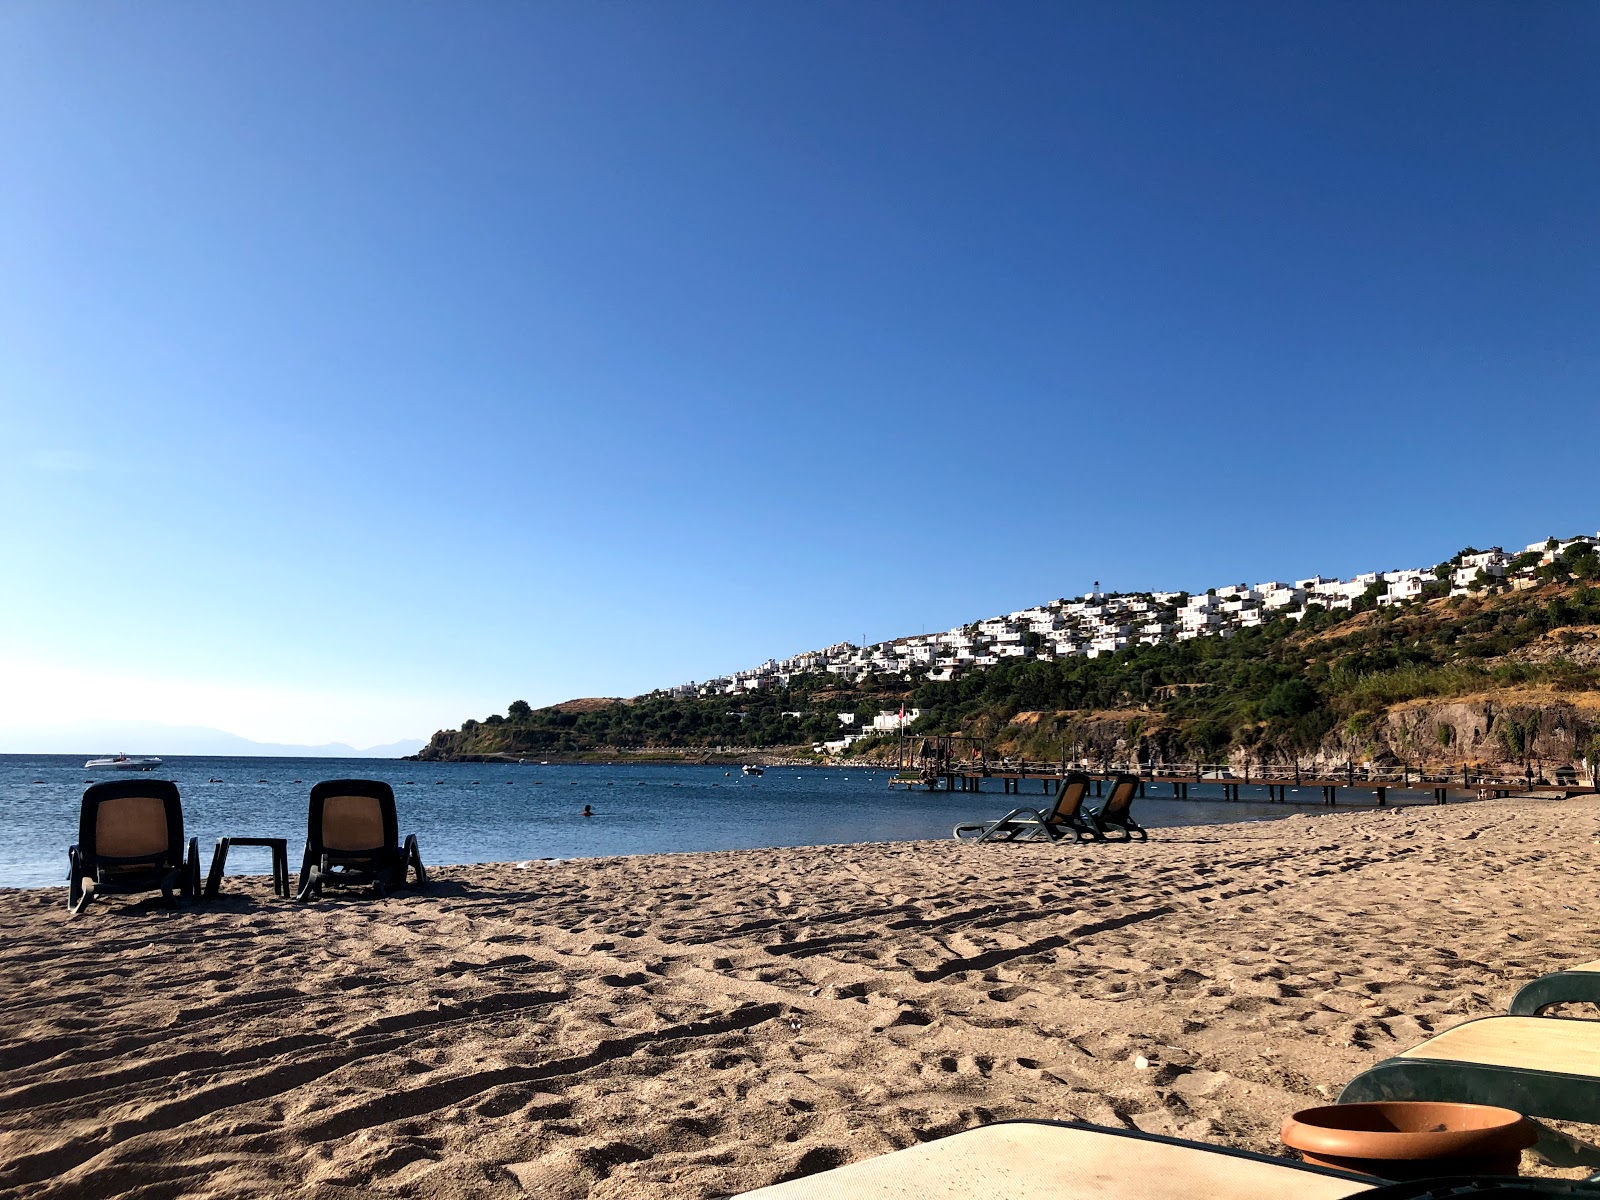 Photo of Kairaba beach - popular place among relax connoisseurs